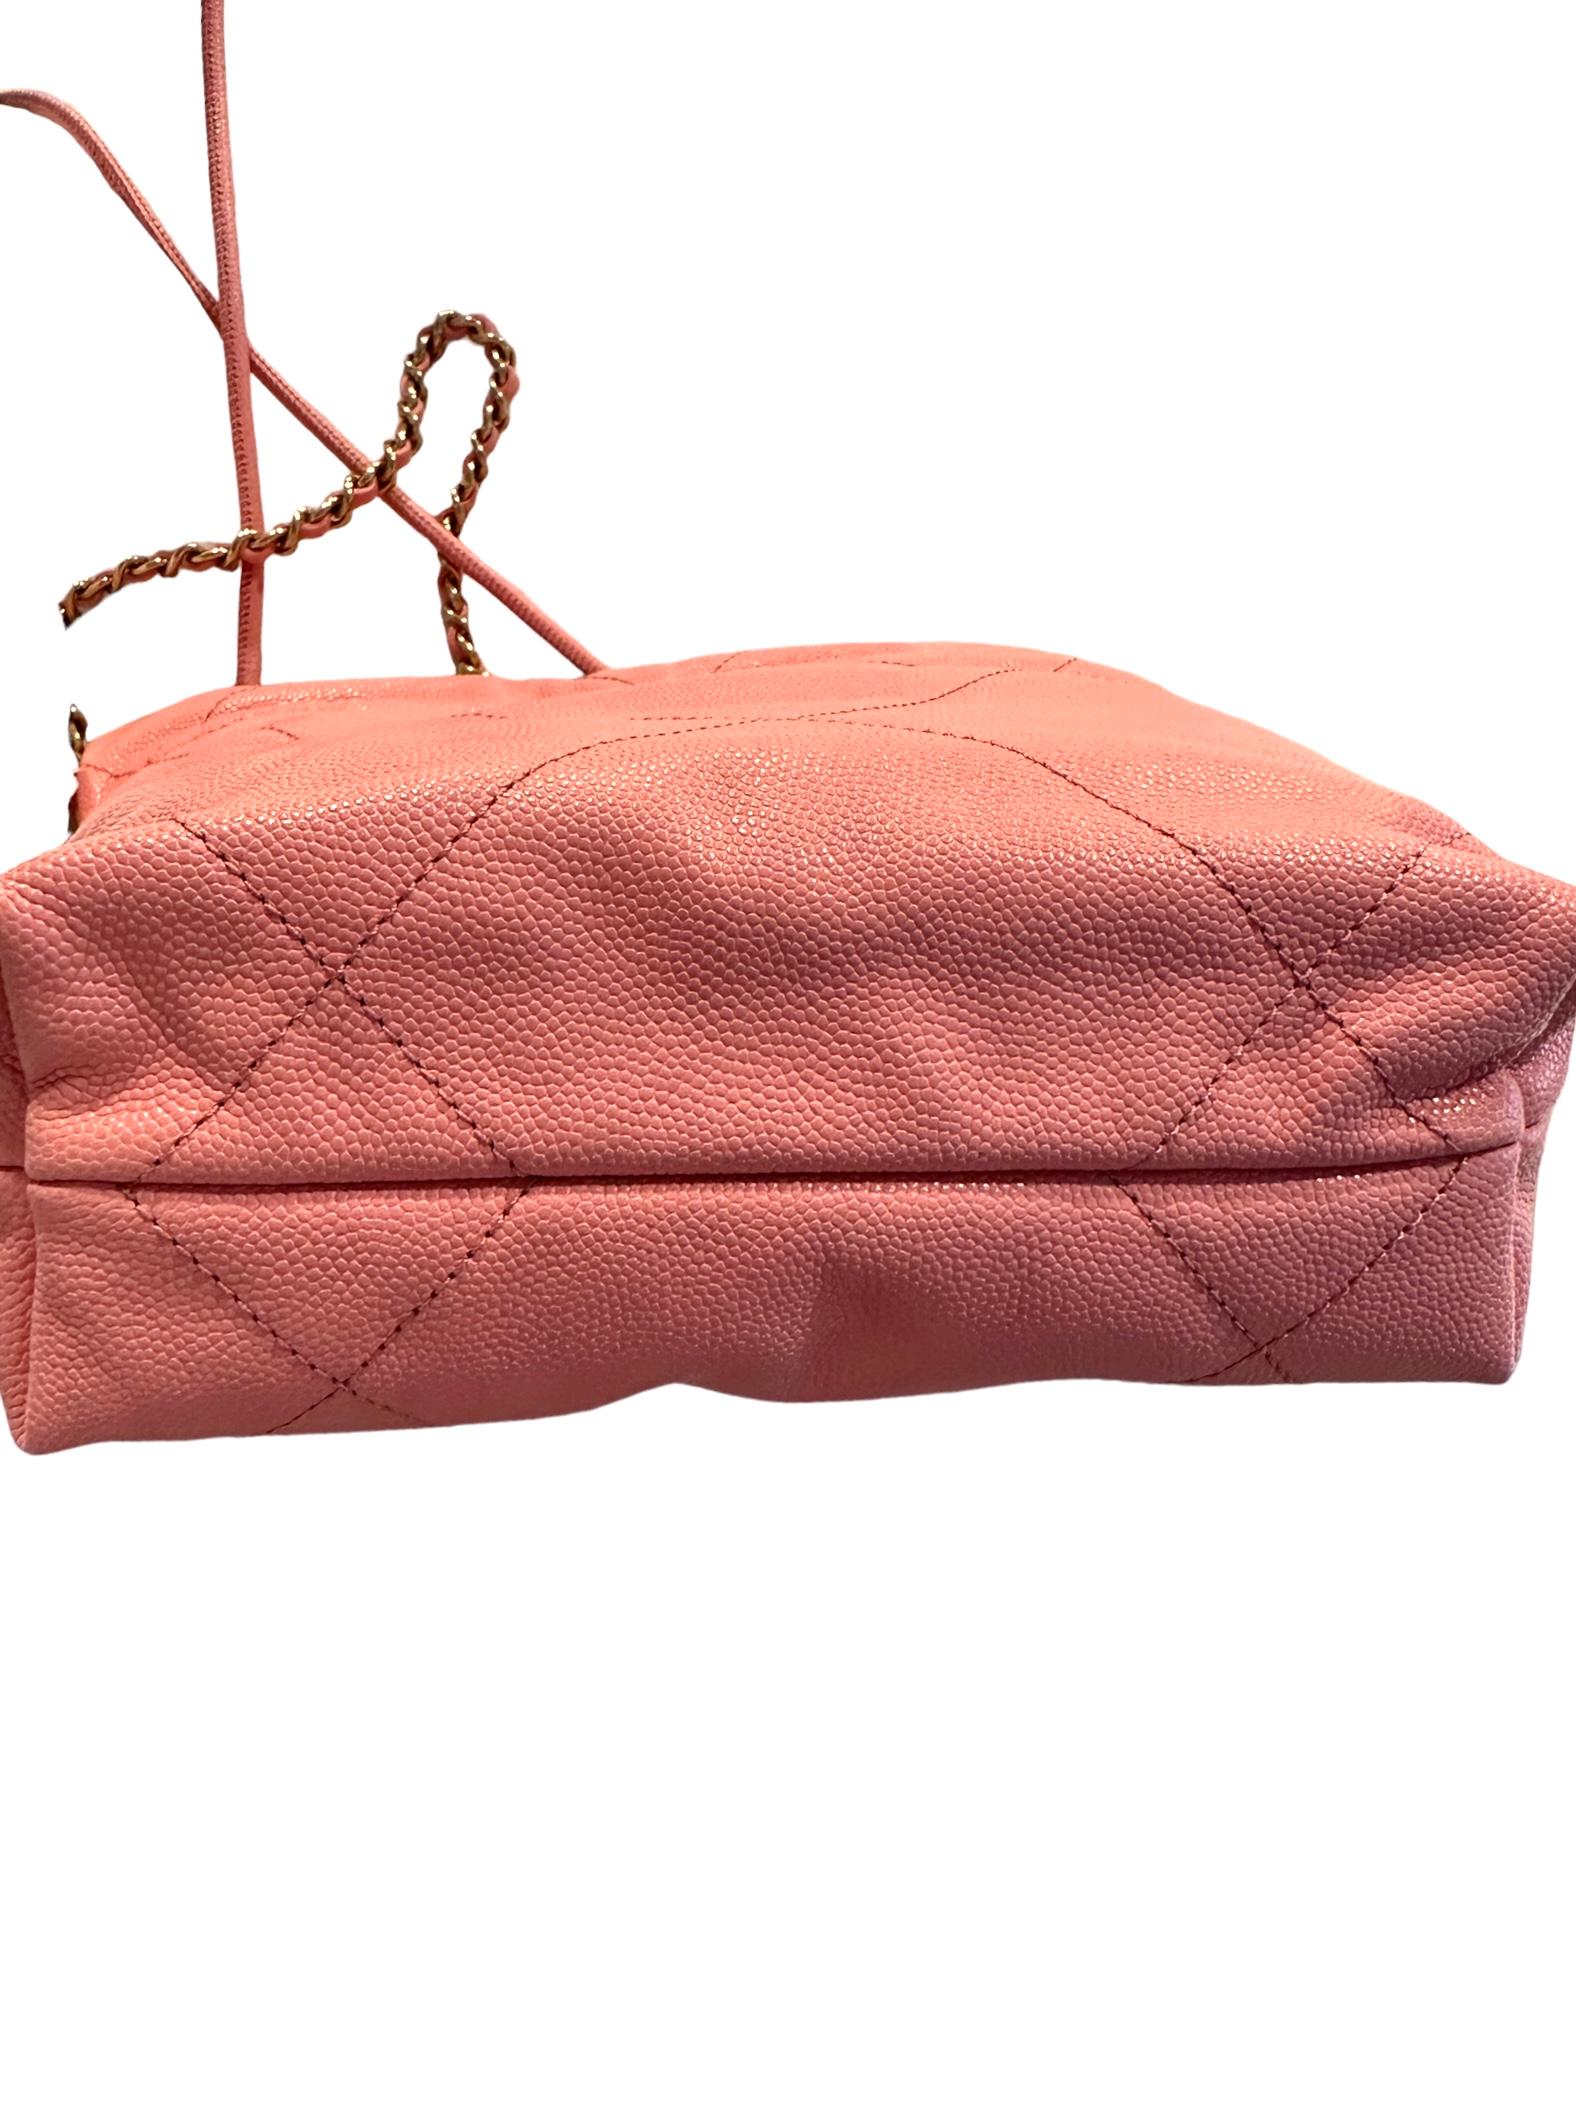 CHANEL 22 Mini Handbag Pink Coral Goldtone NEW 5